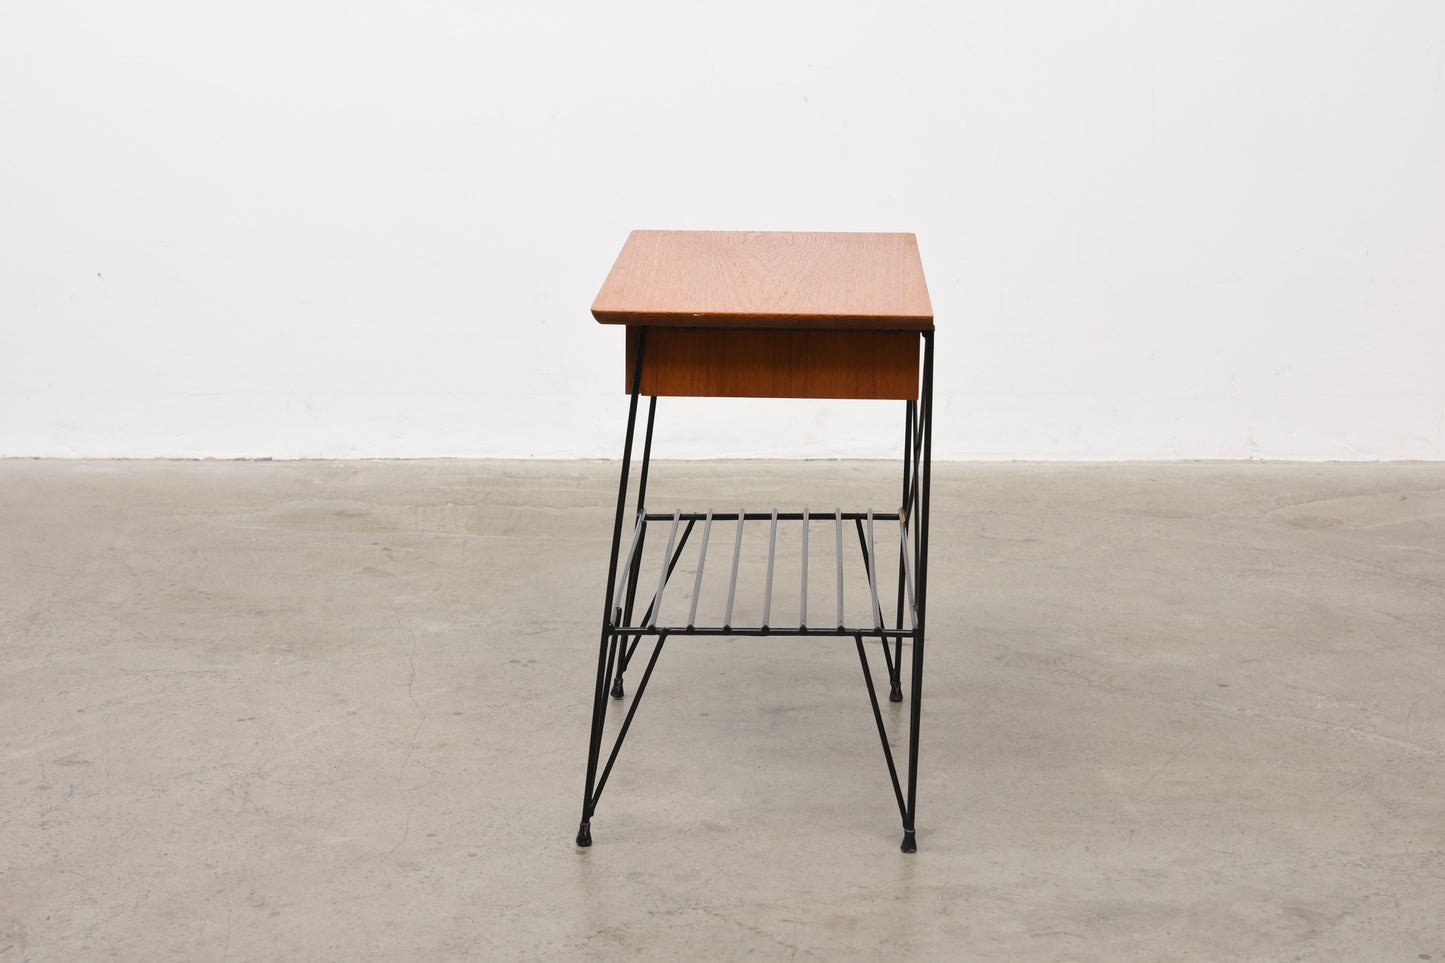 Teak bedside table by Nils Strinning